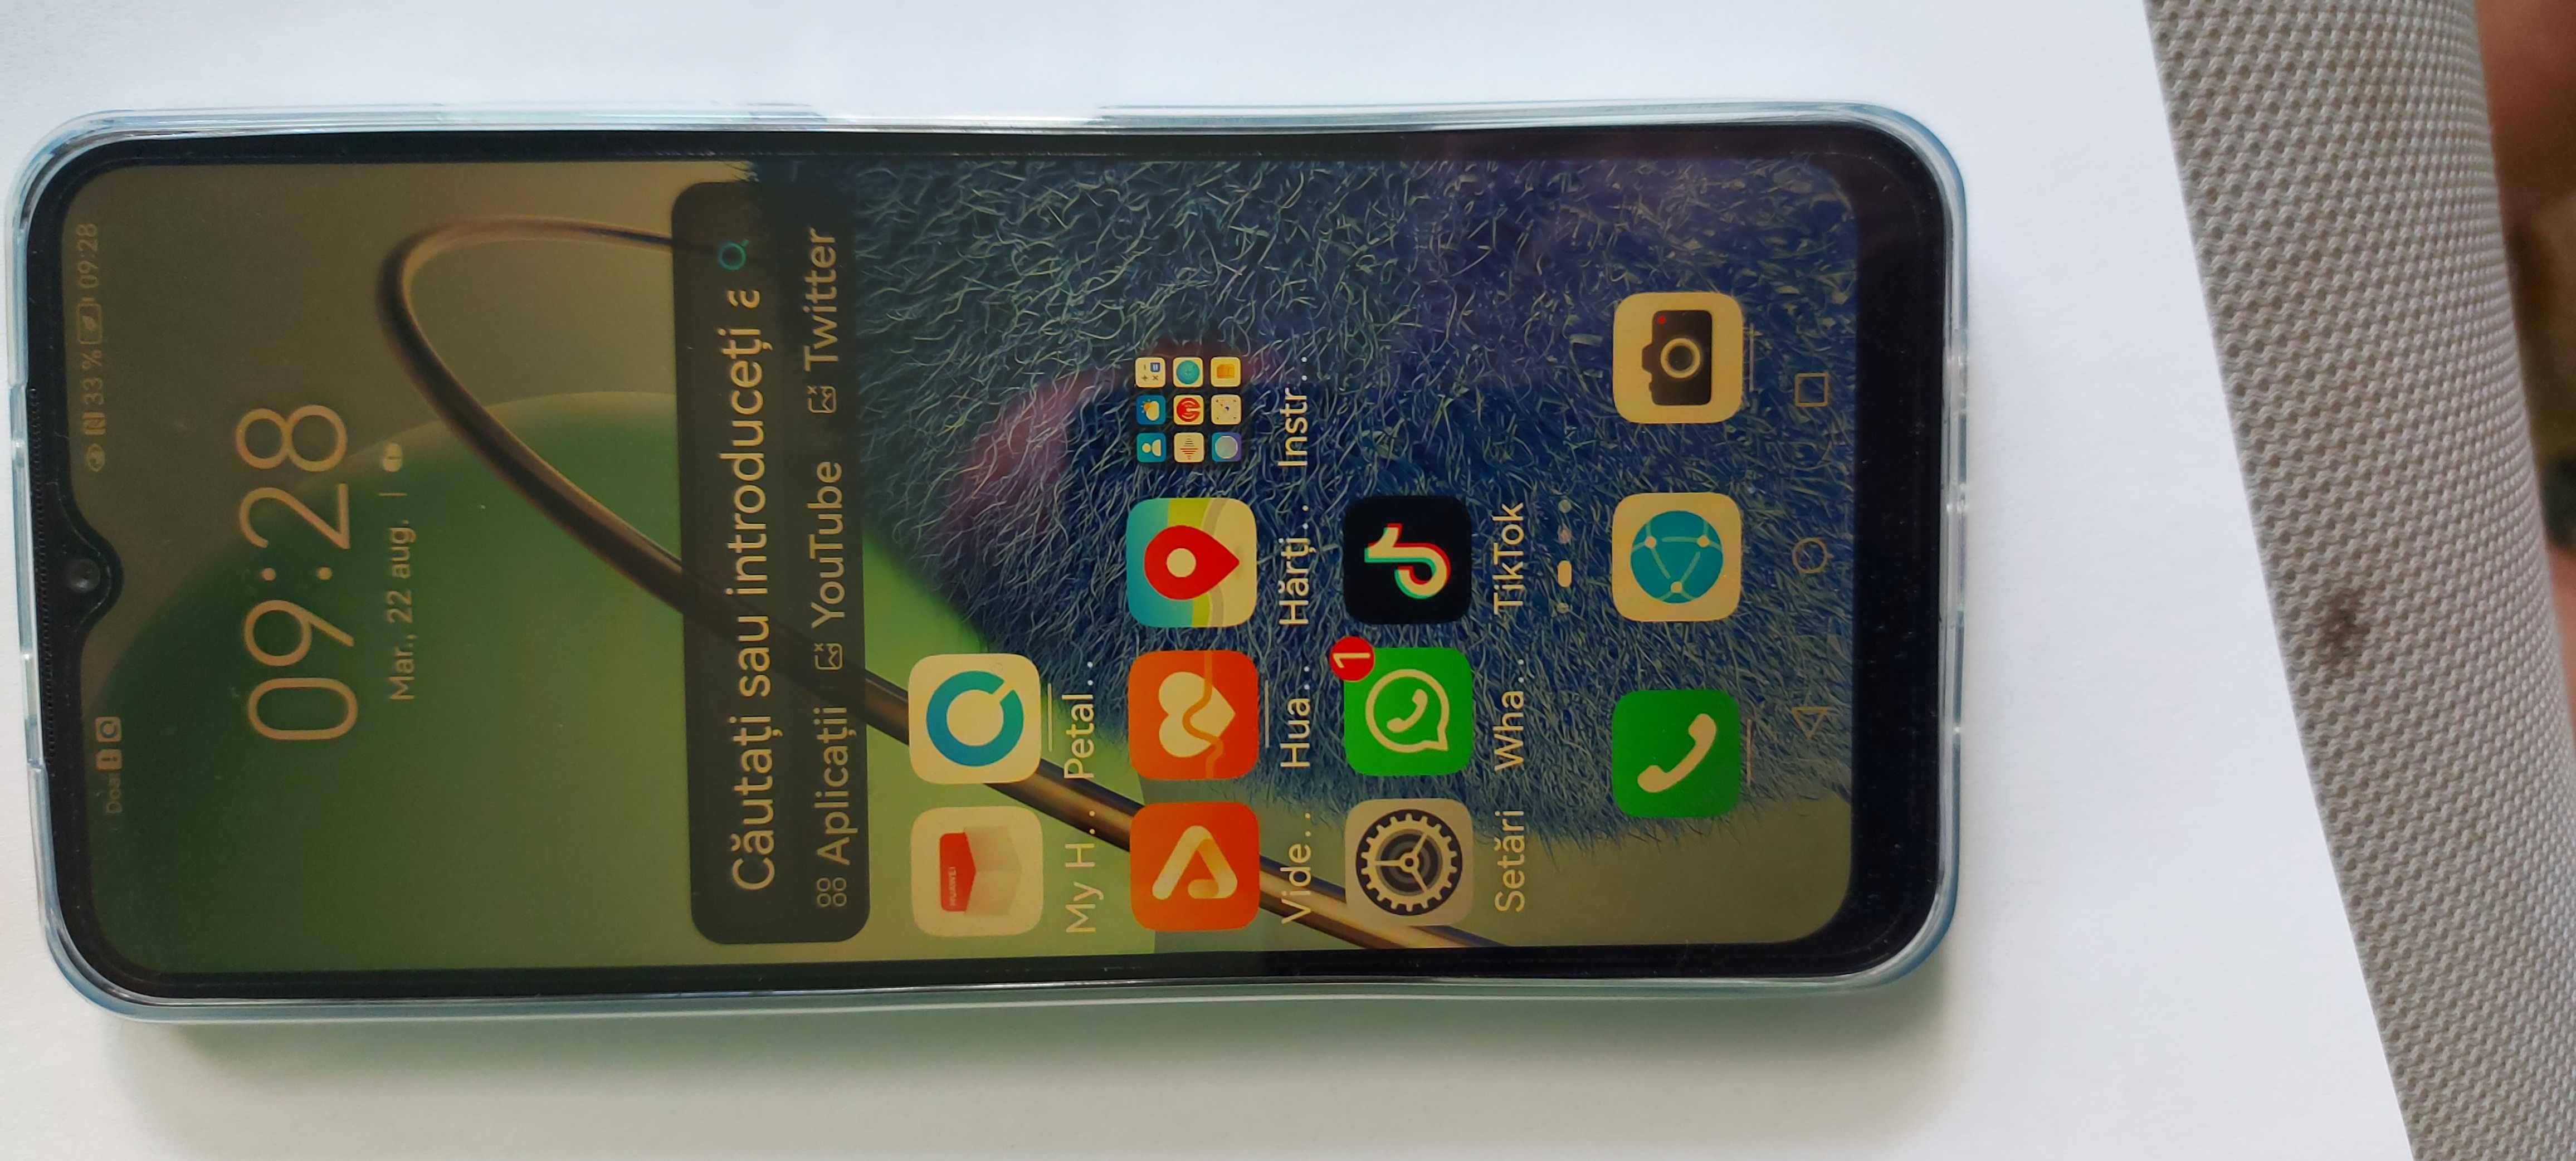 vand smartphone Huawei nova y61, nou, 4 ani garantie